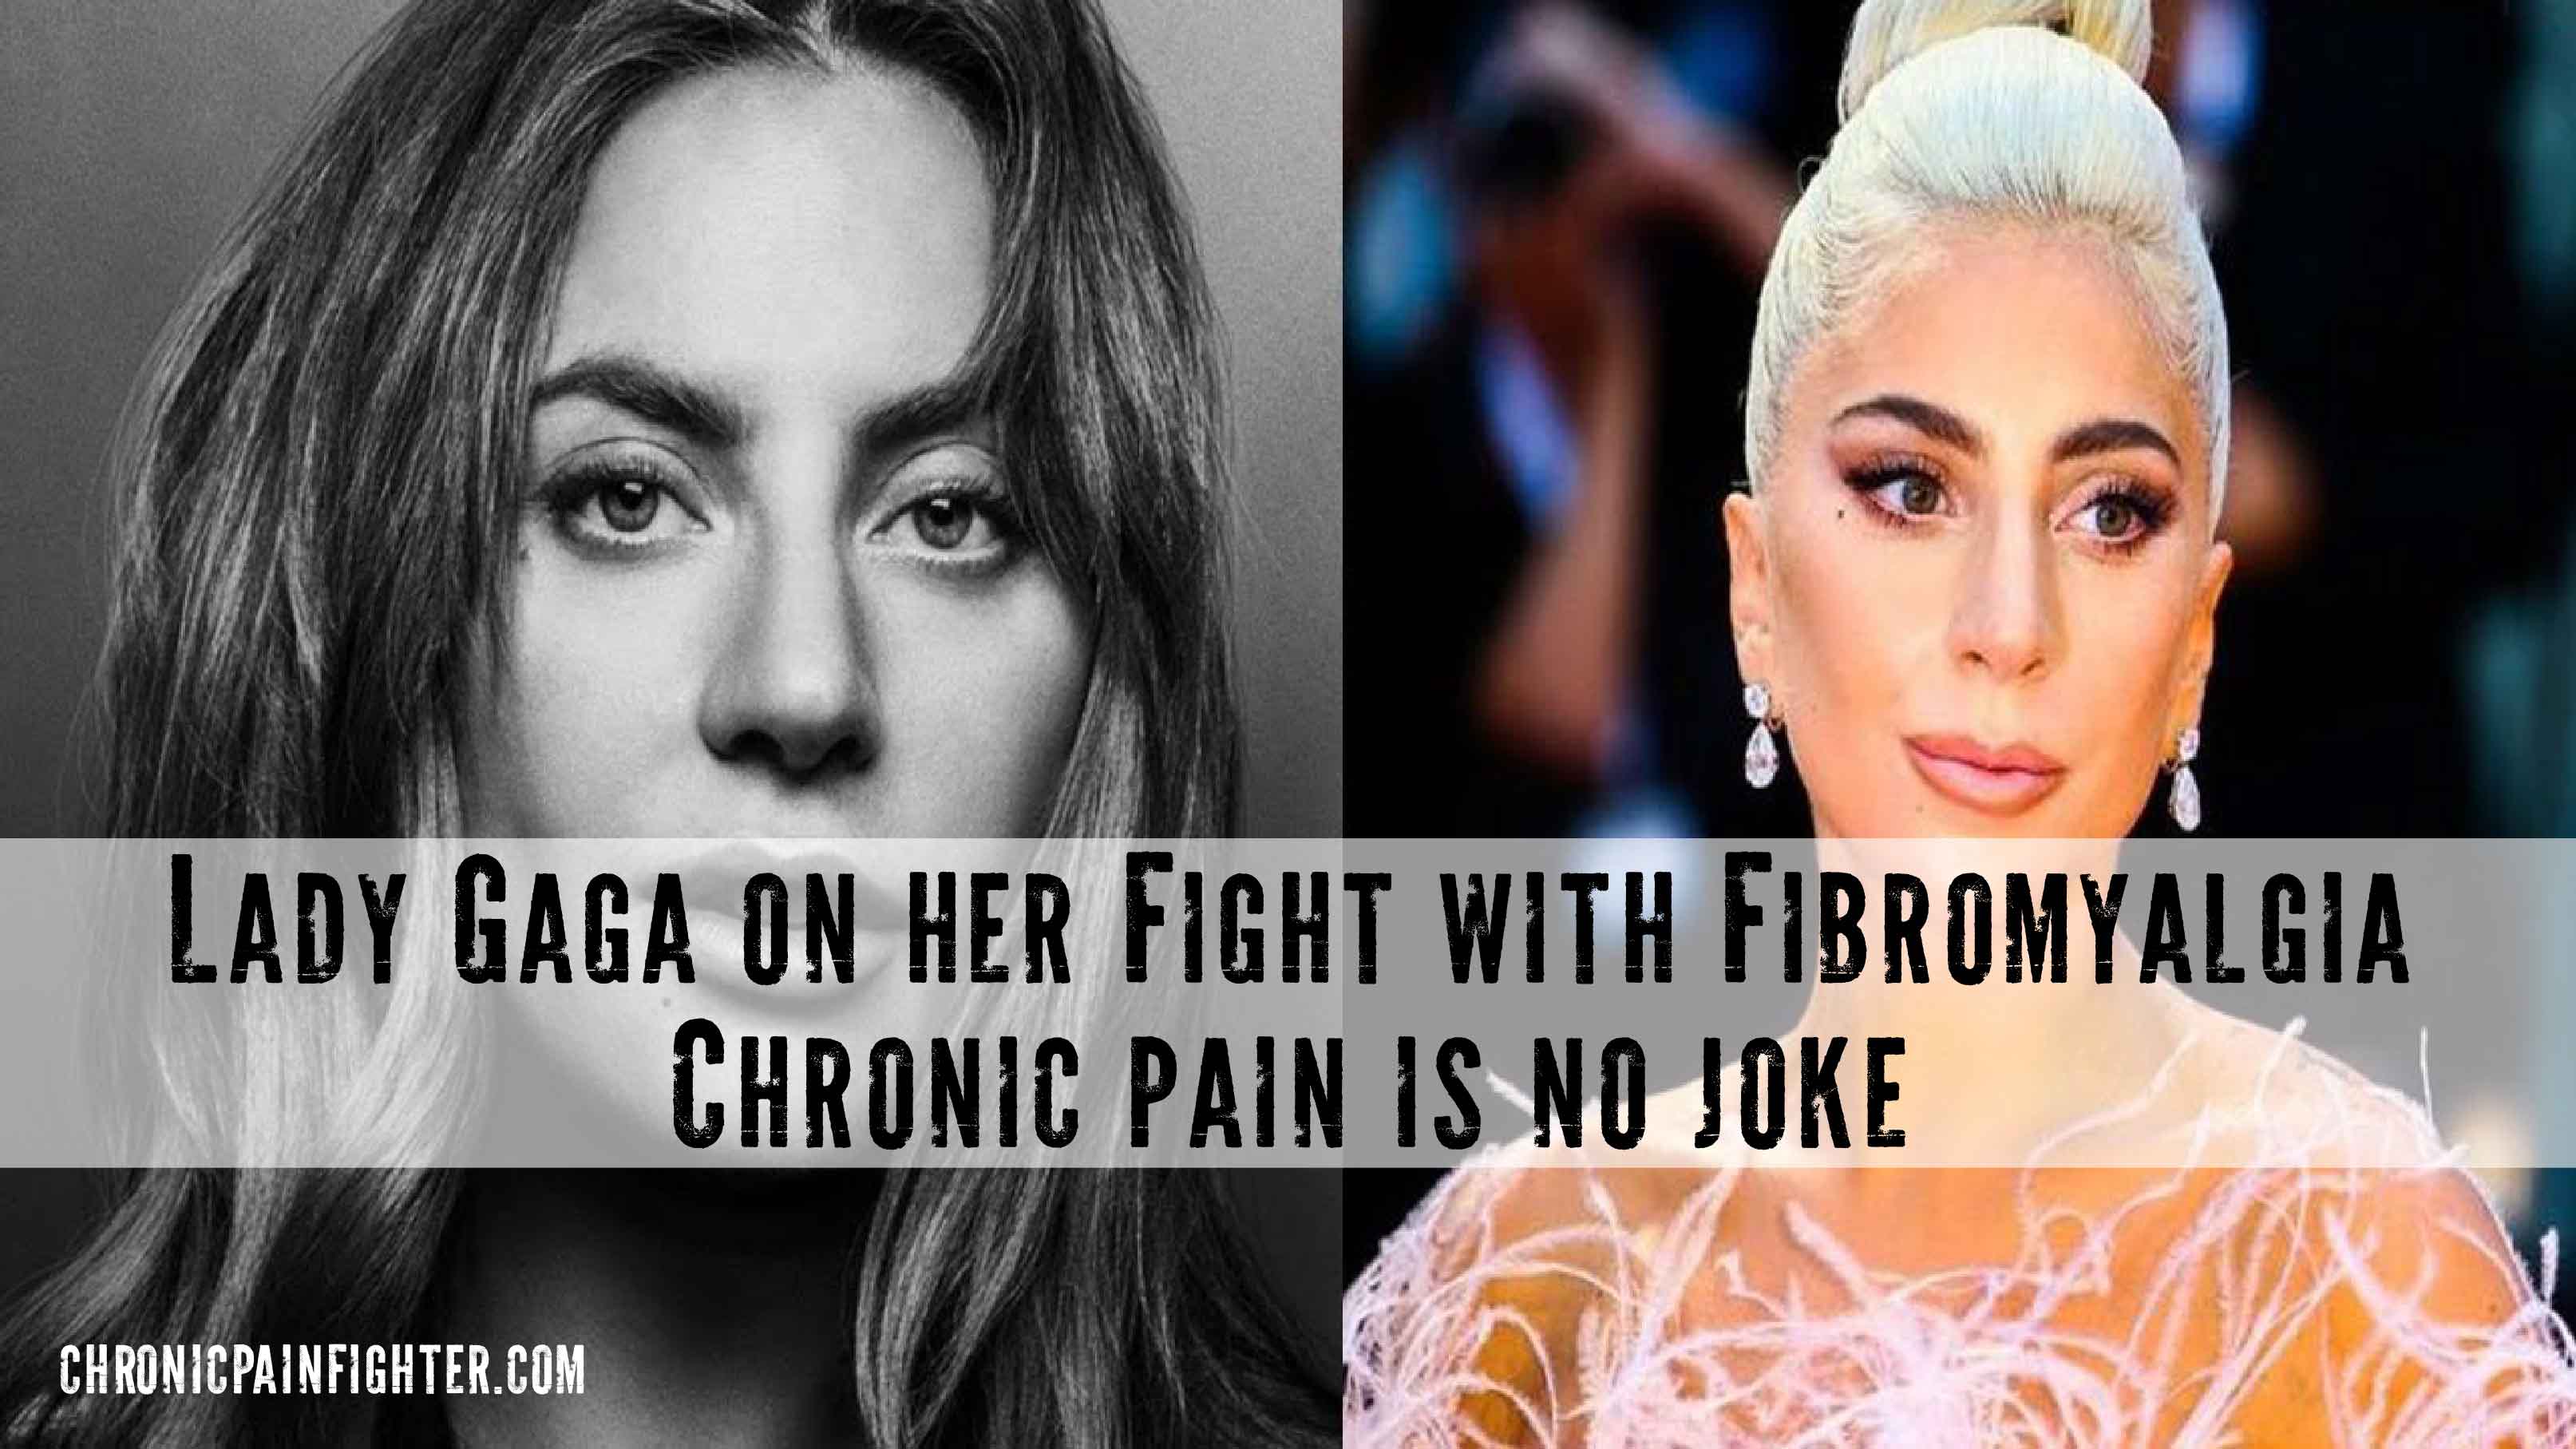 Lady Gaga on her fight with fibromyalgia: ‘Chronic pain is no joke’